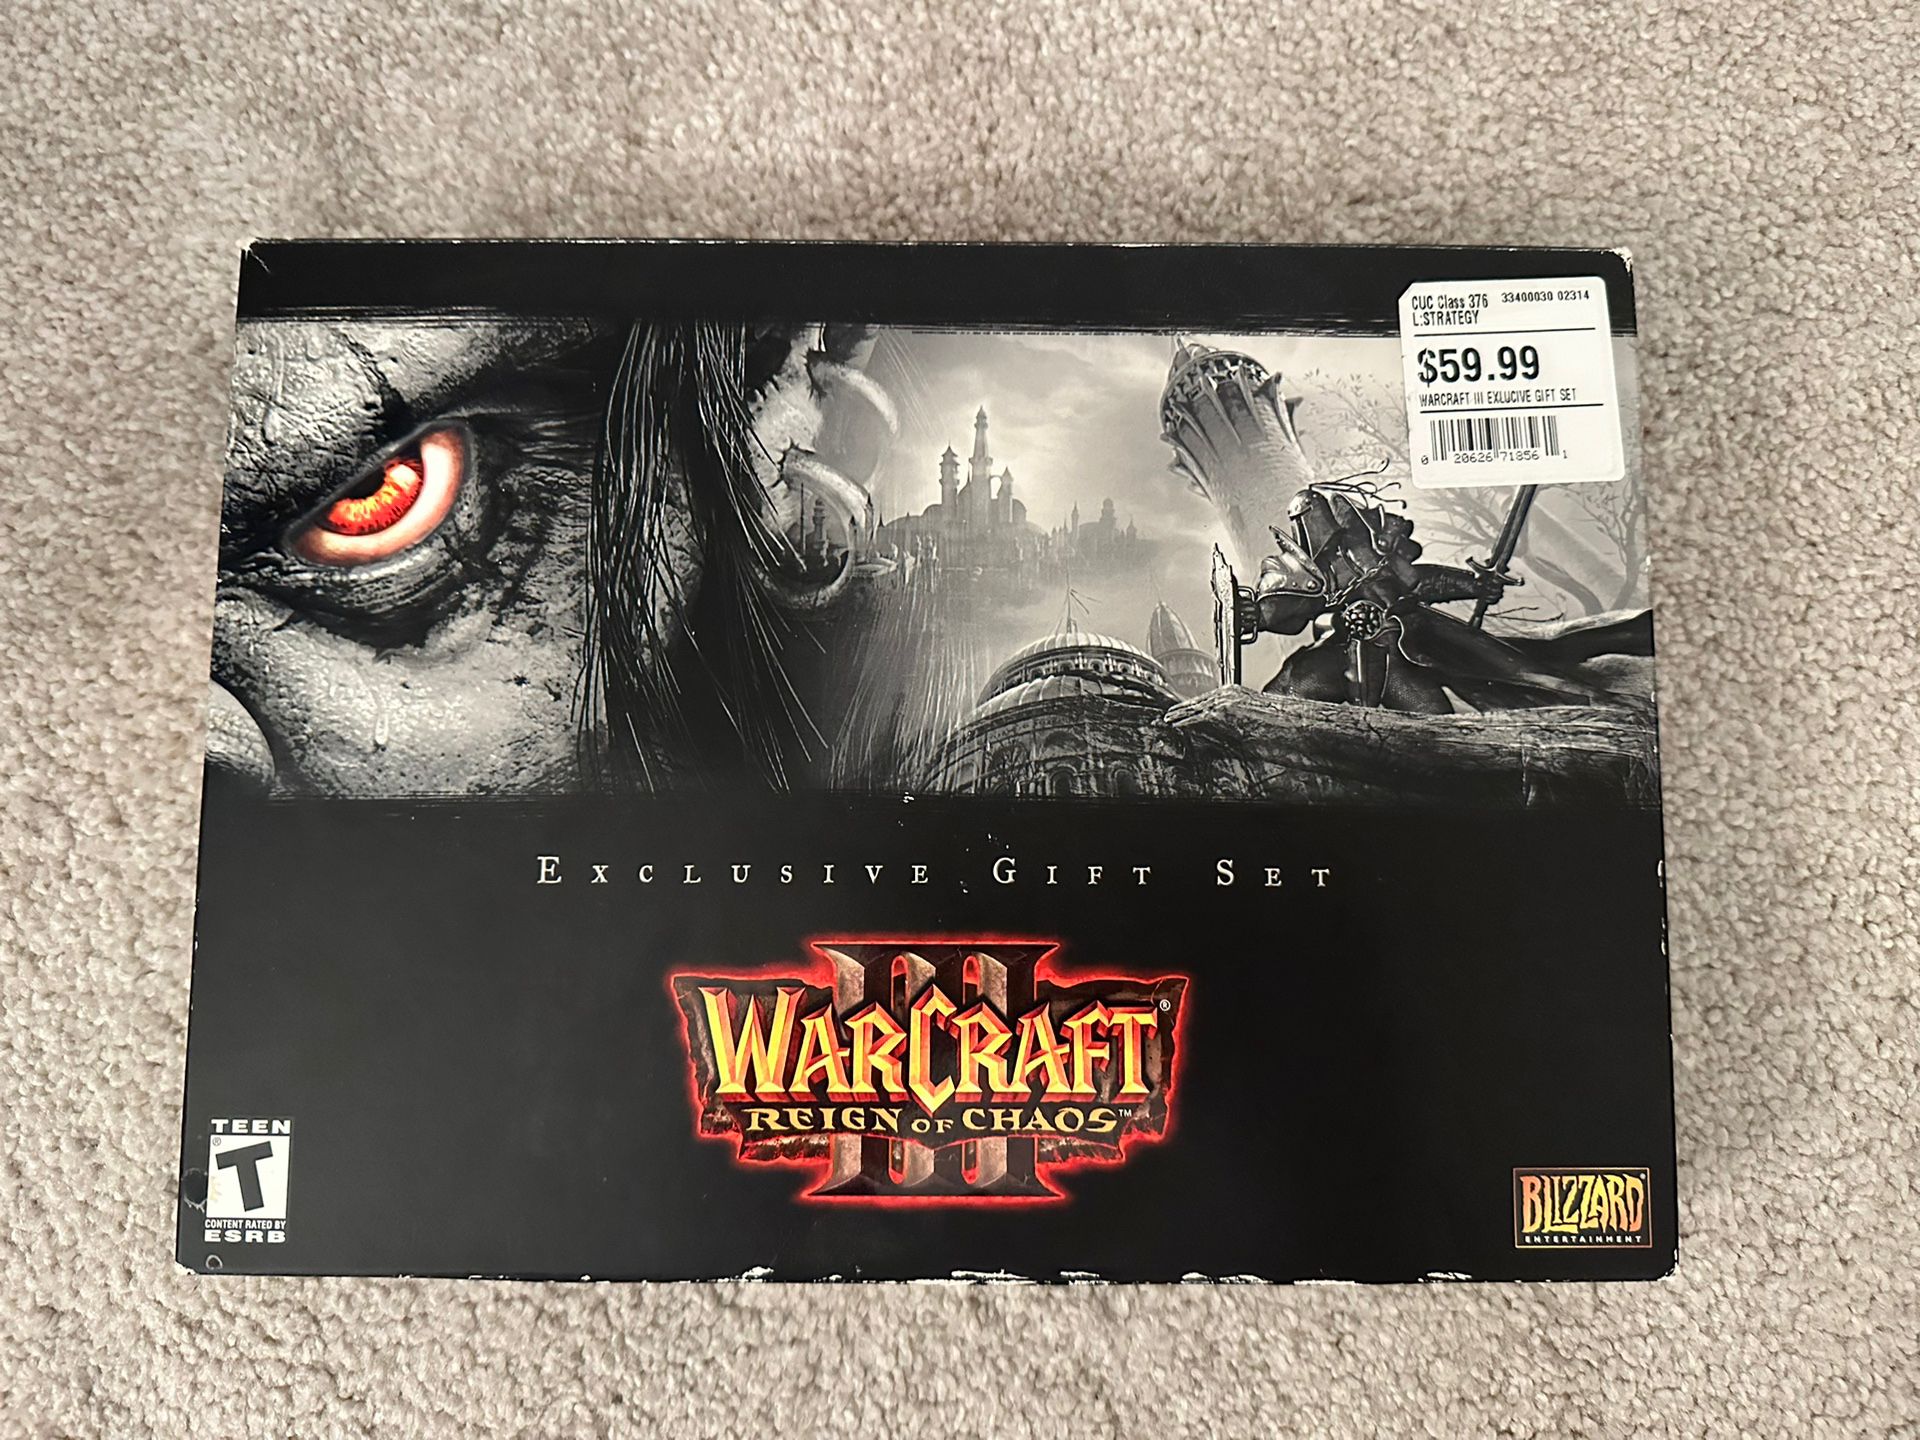 WarCraft III: Reign of Chaos -- Exclusive Gift Set (Windows/Mac, 2002)